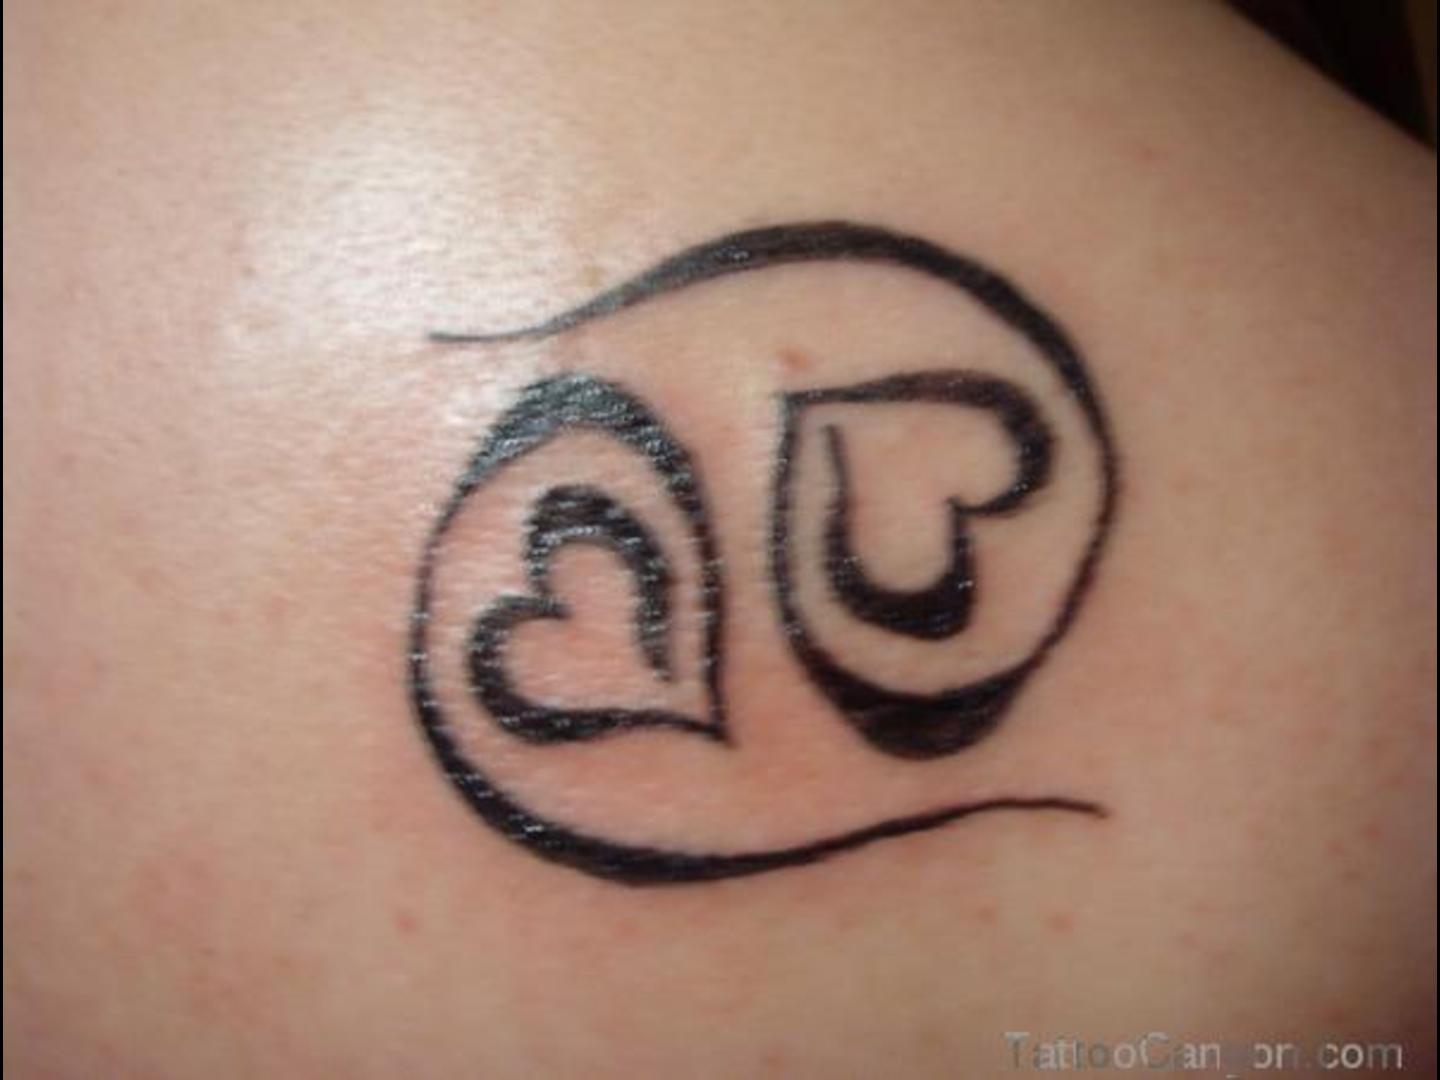 cancerian | Wrist tattoos for women, Forearm band tattoos, Dope tattoos for  women